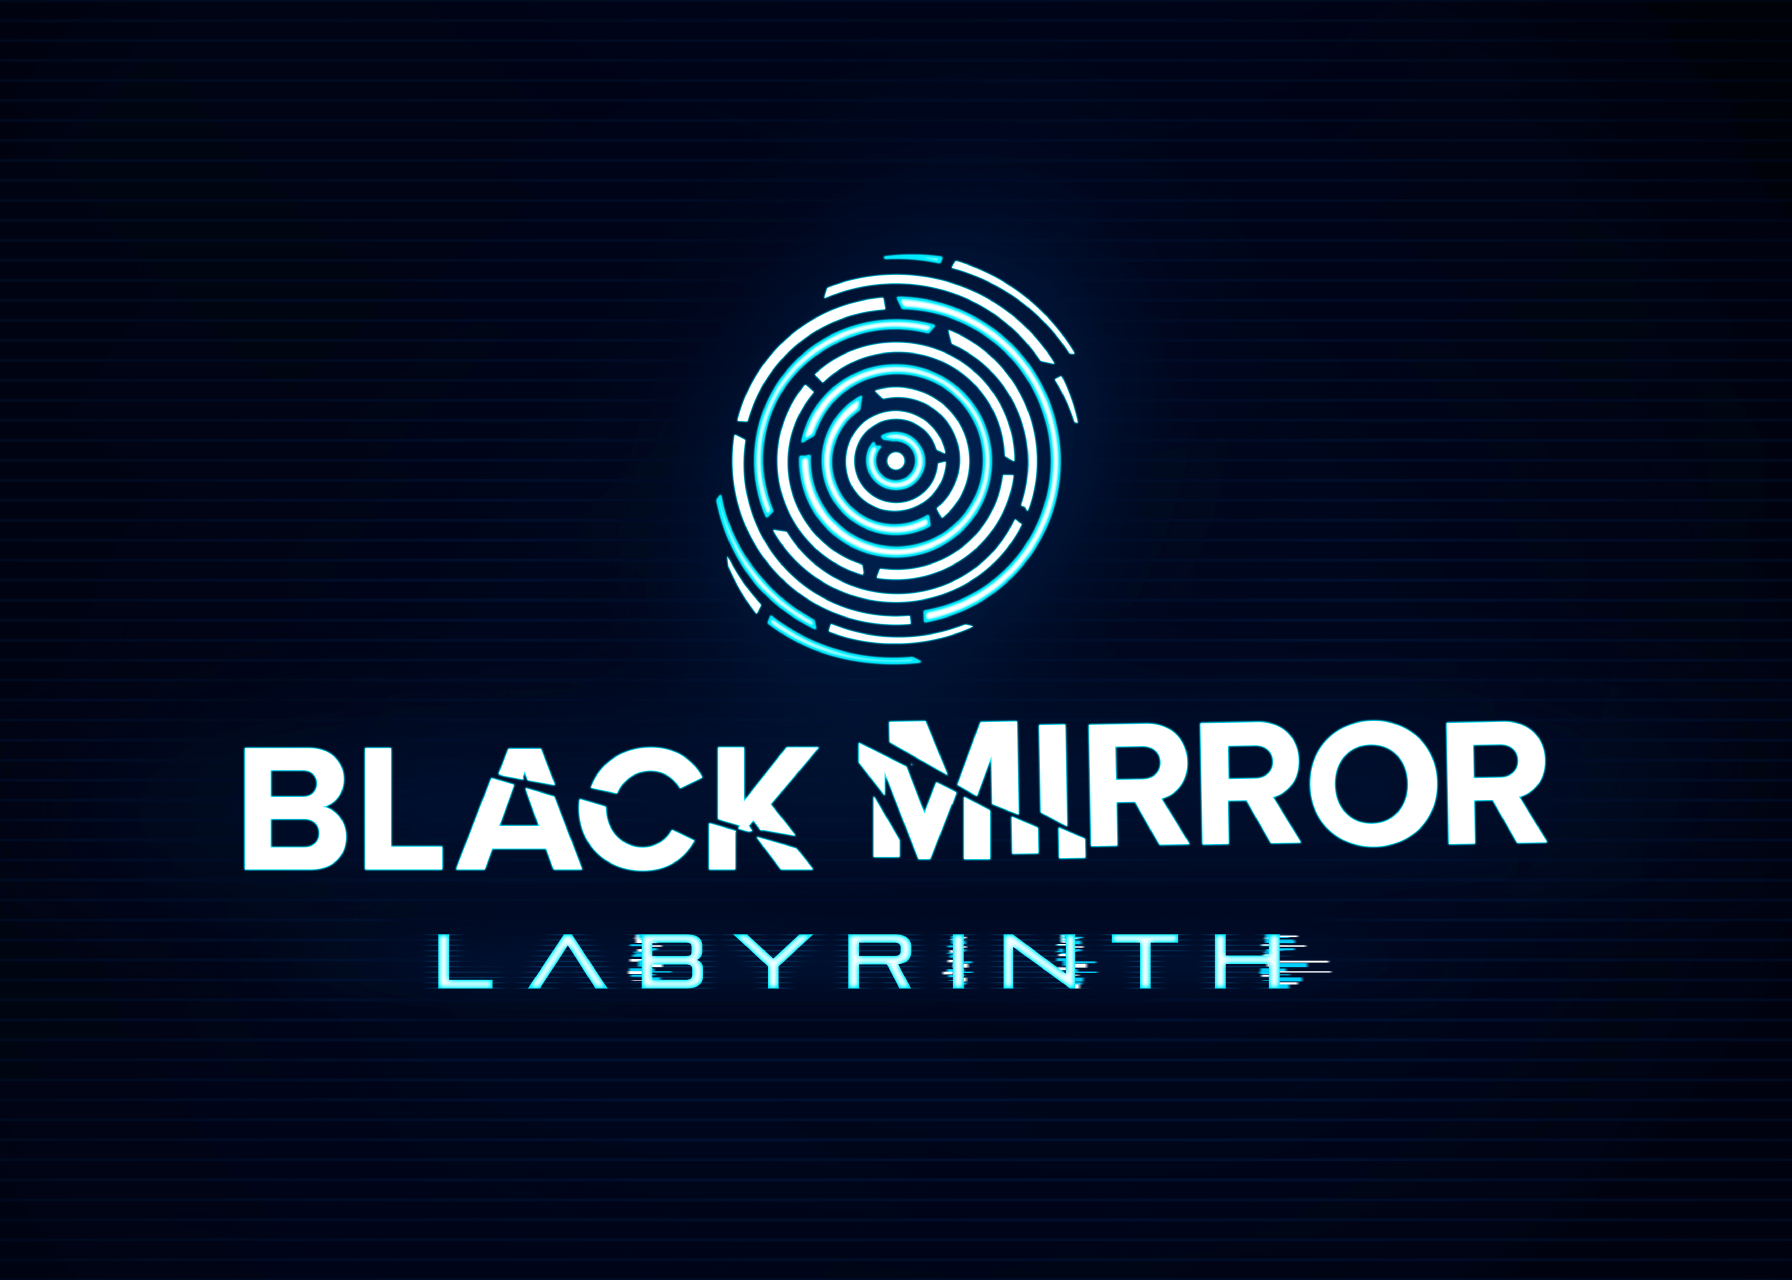 Black Mirror Labyrinth Logo